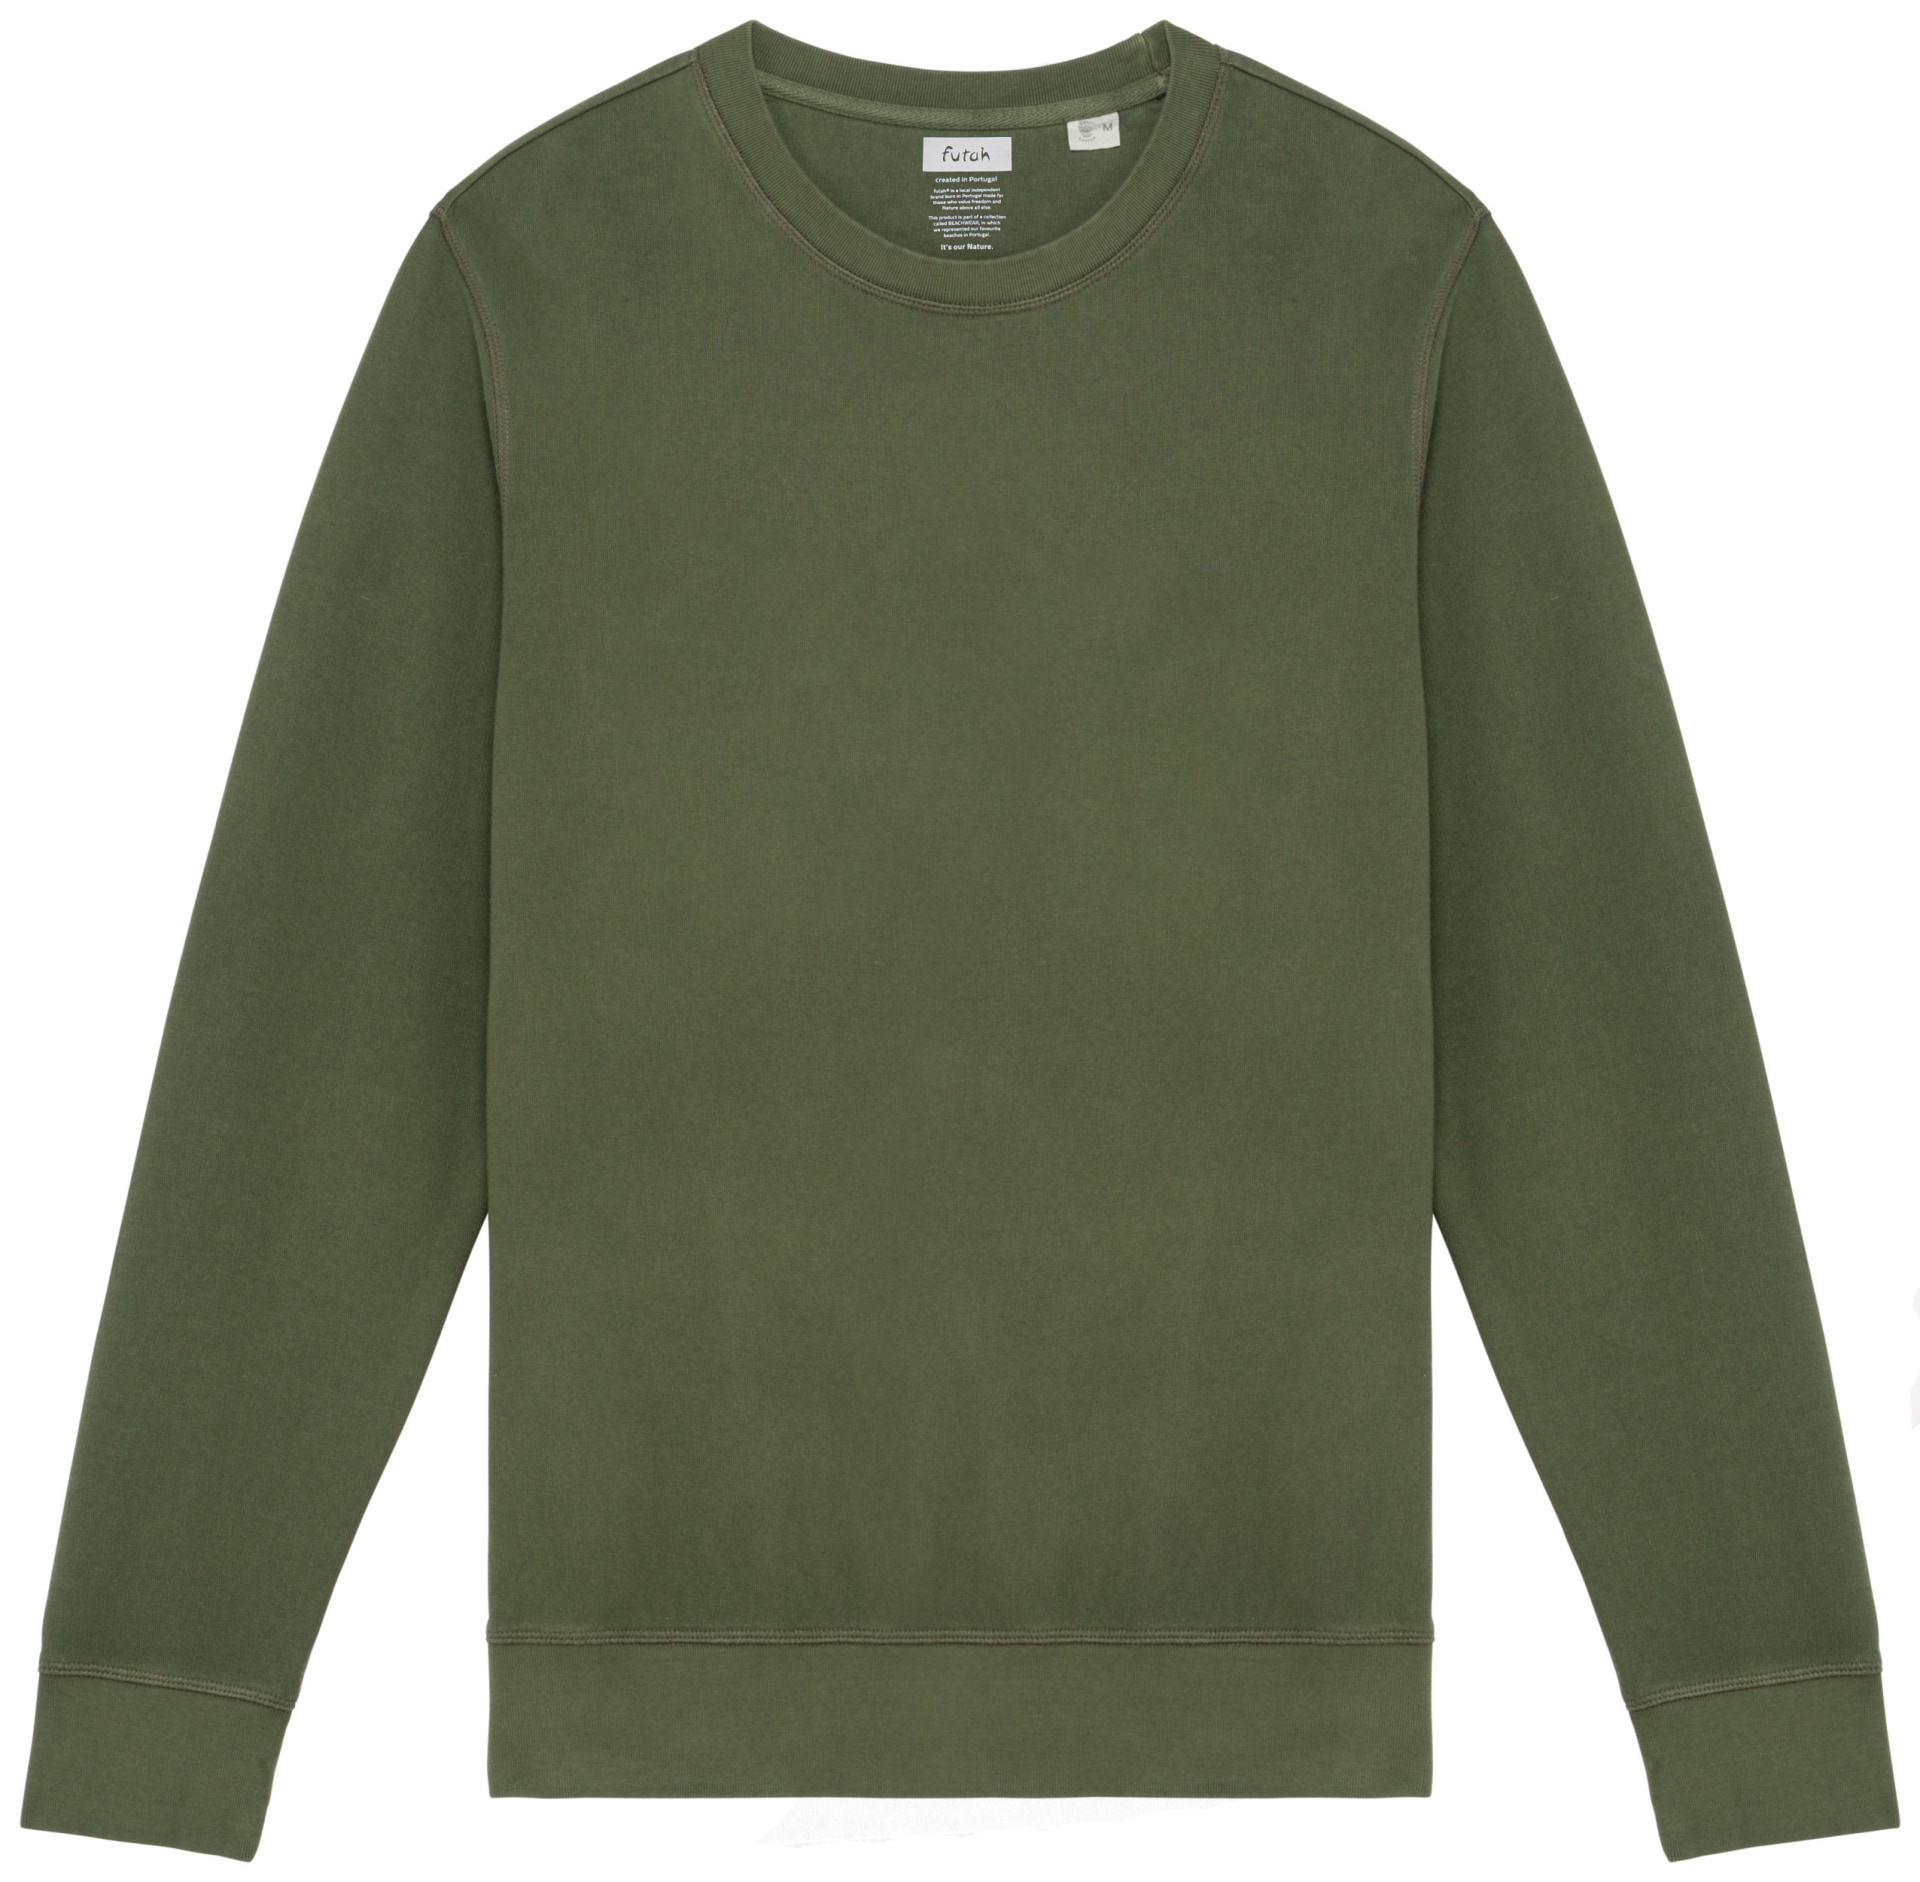 Futah - Organic Cotton Sweatshirt - Khaki (1)